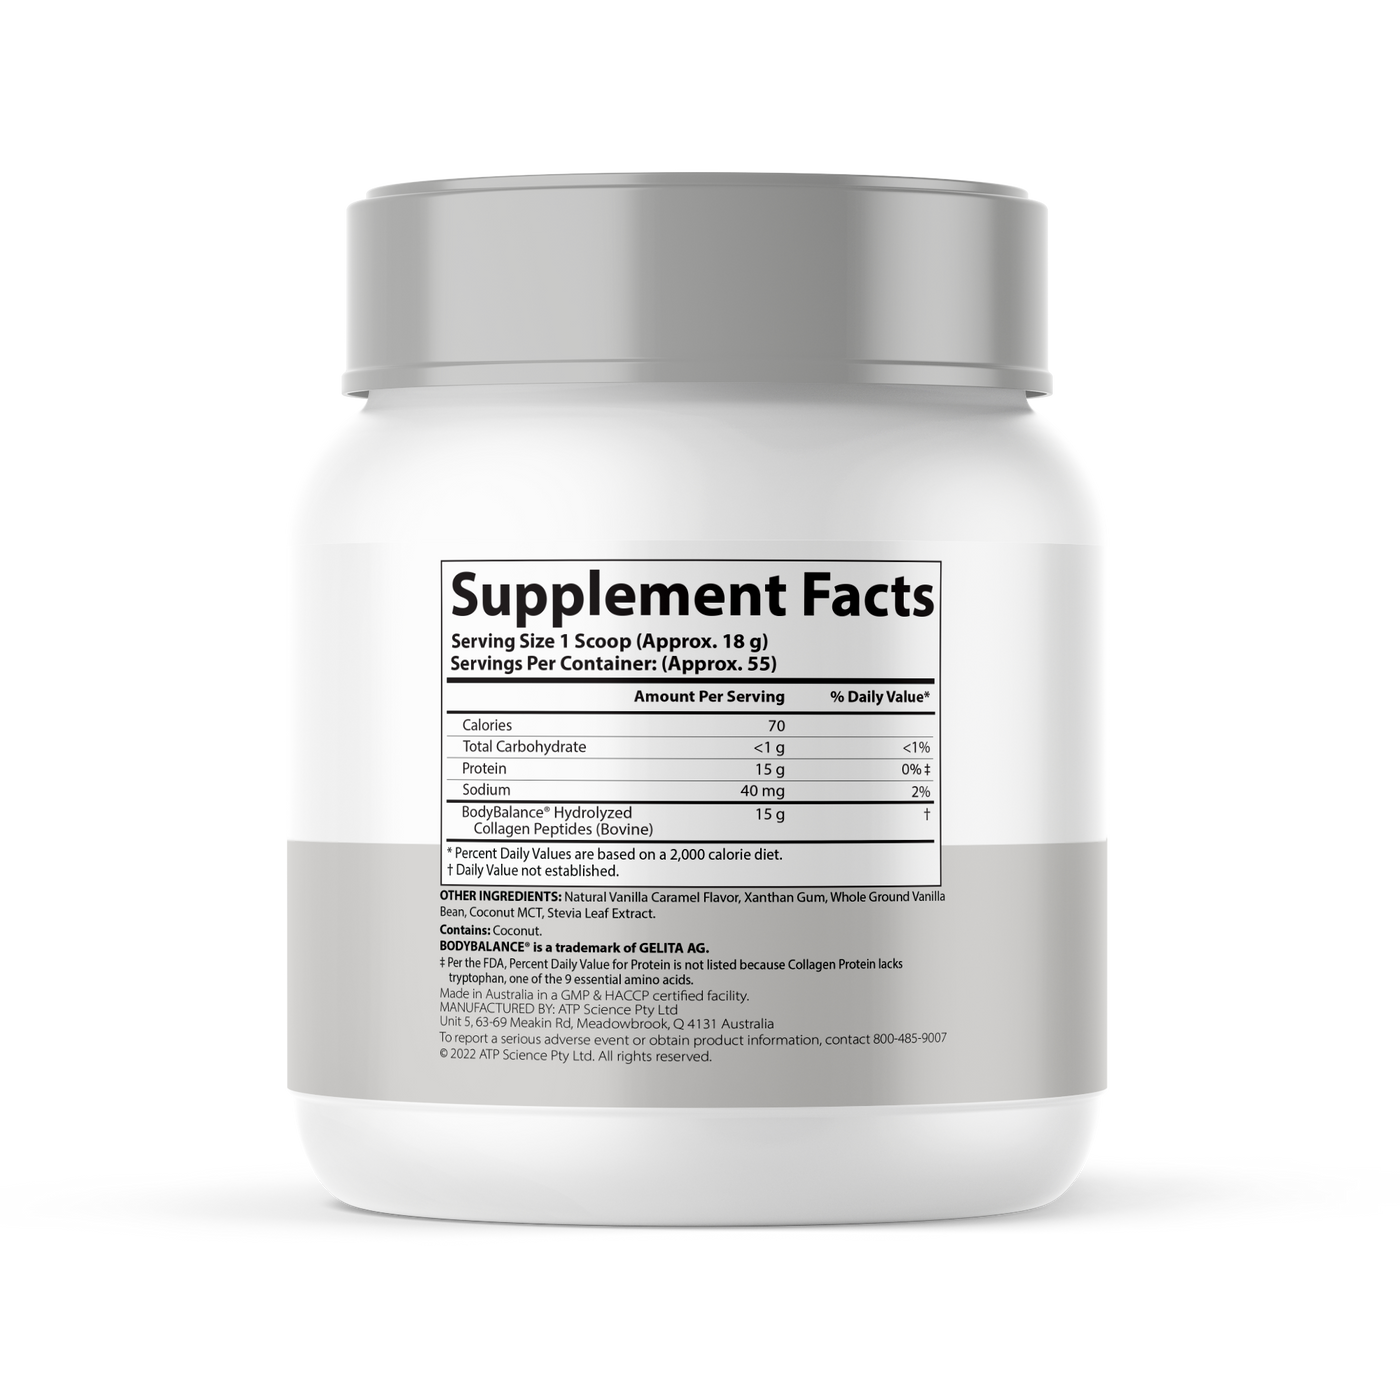 NOWAY Collagen Supplement - 2.2LBS Natural Vanilla Flavored